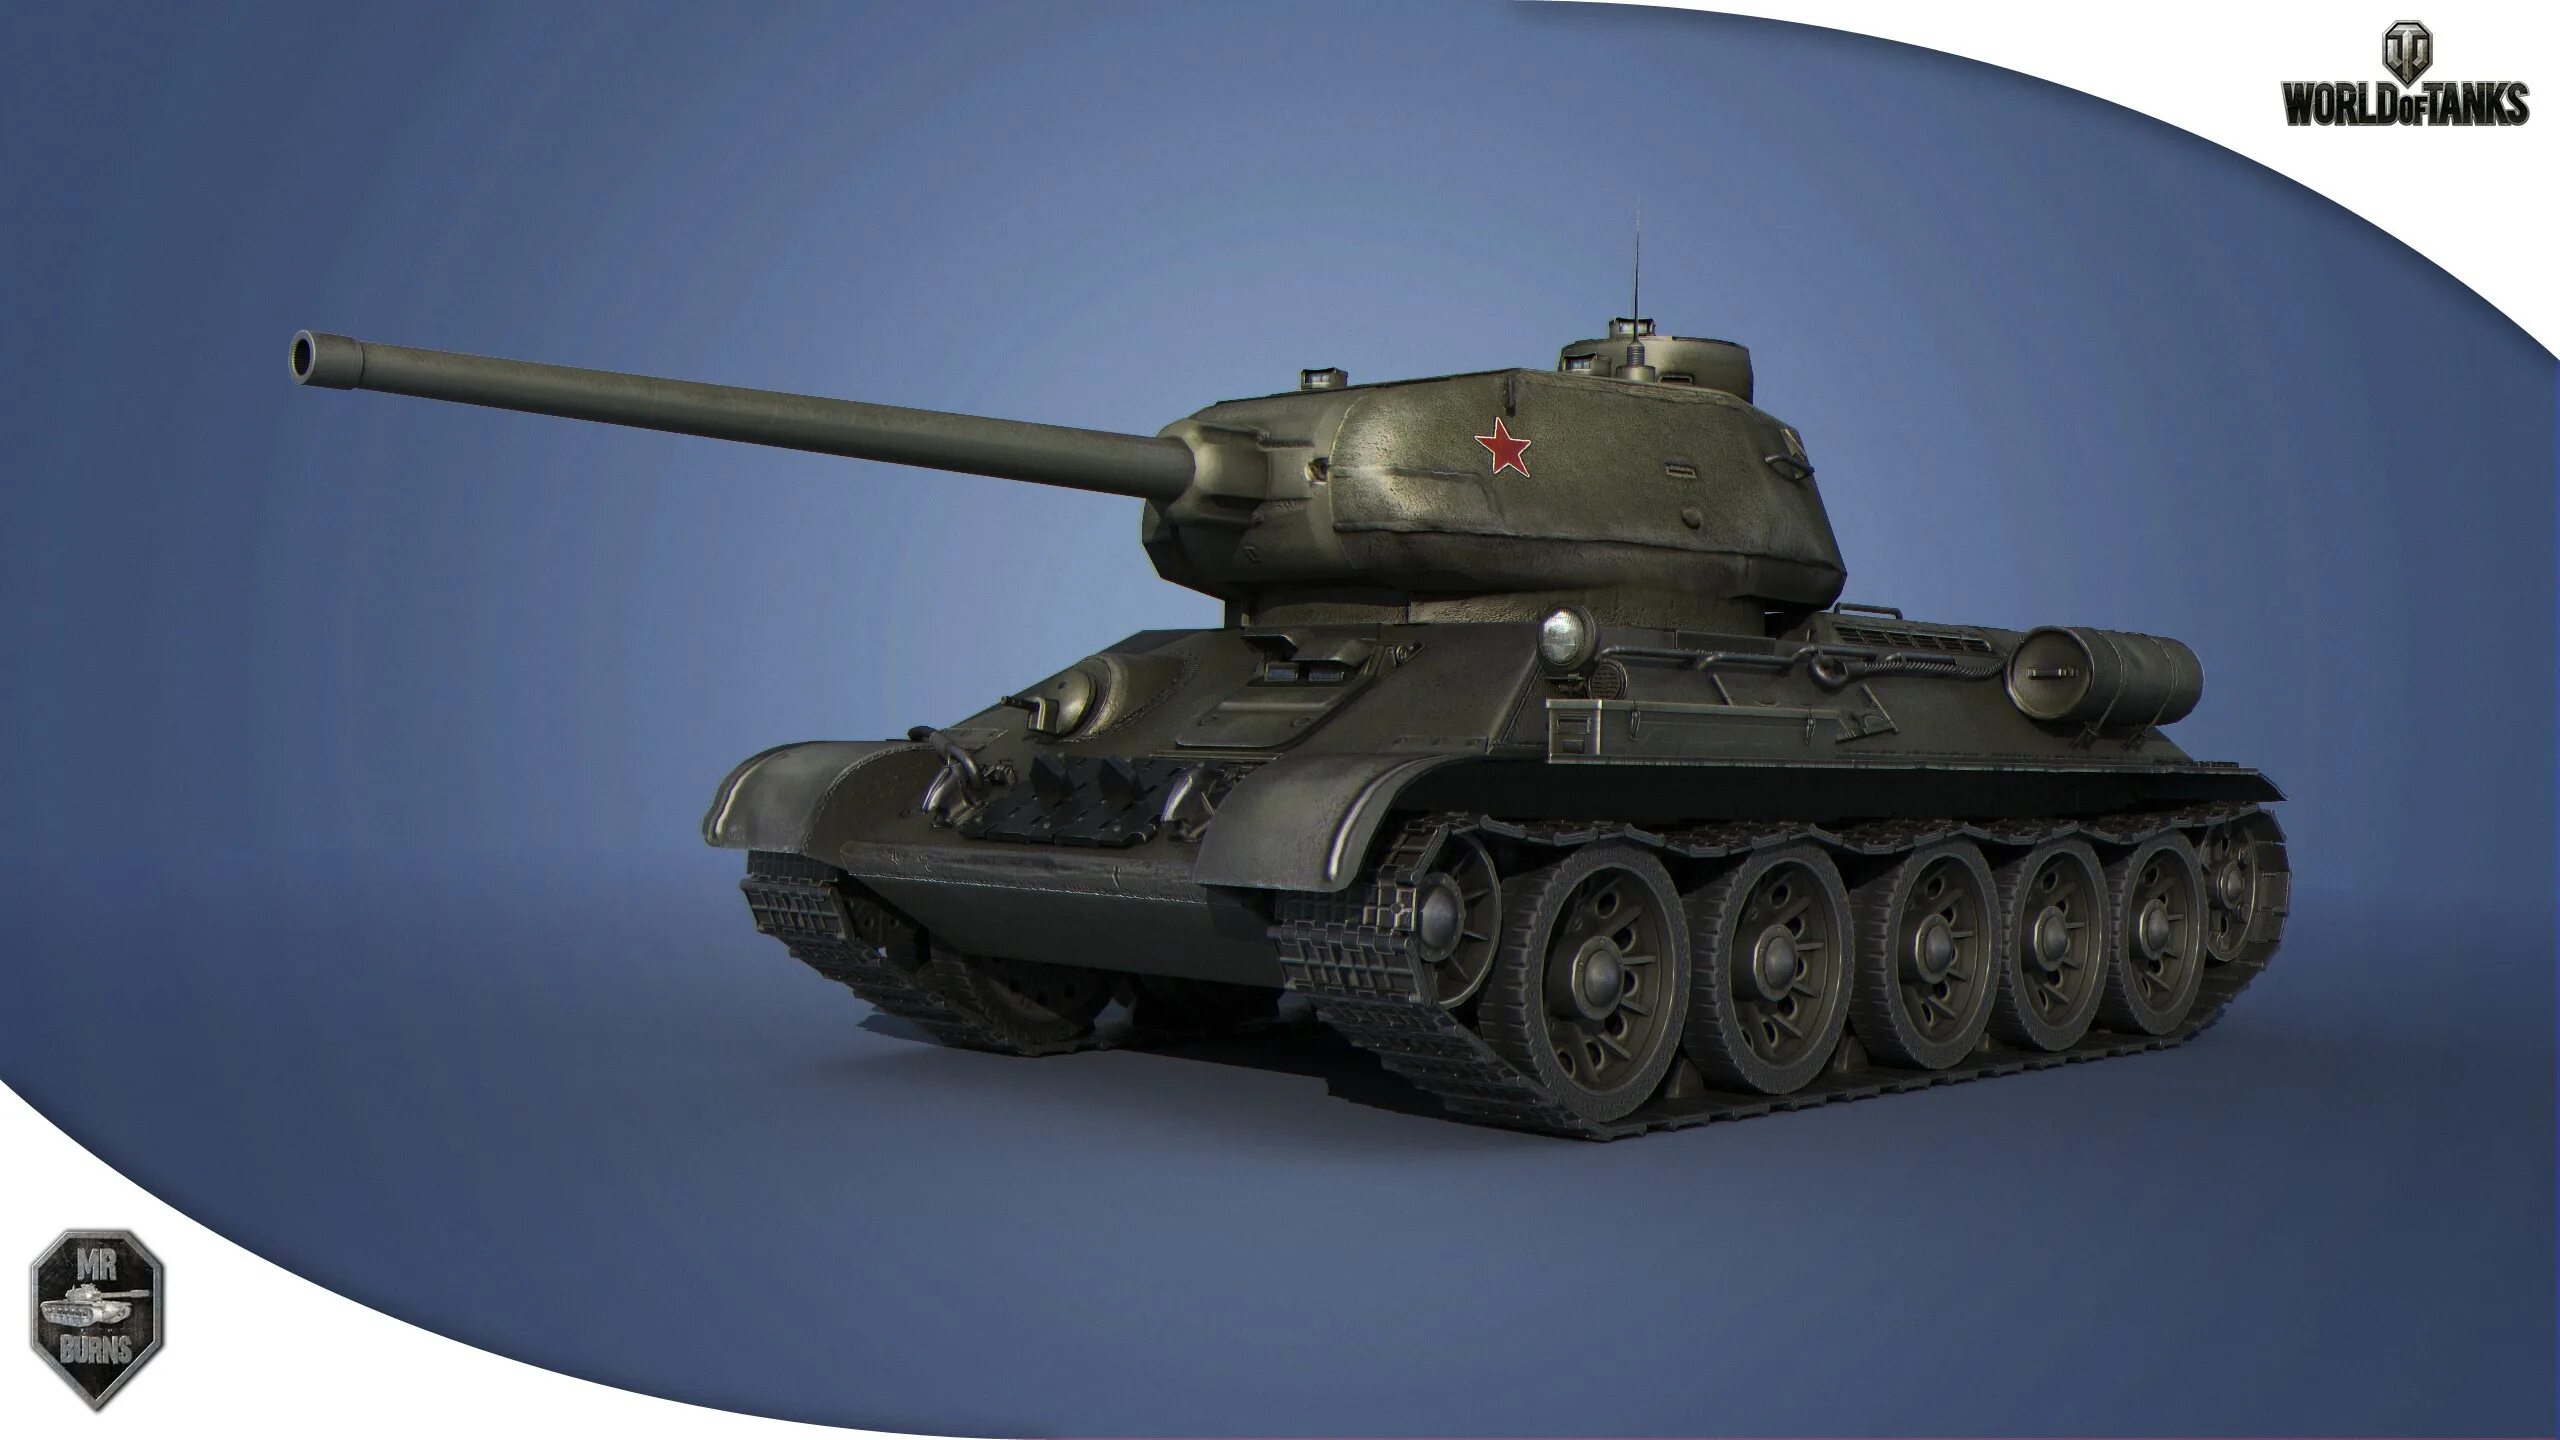 М3 43. Танк т-34 World of Tanks. Т 34 85 ворлд оф танк. Танк т34-85 в World of Tanks. Т-34-85 танк WOT.